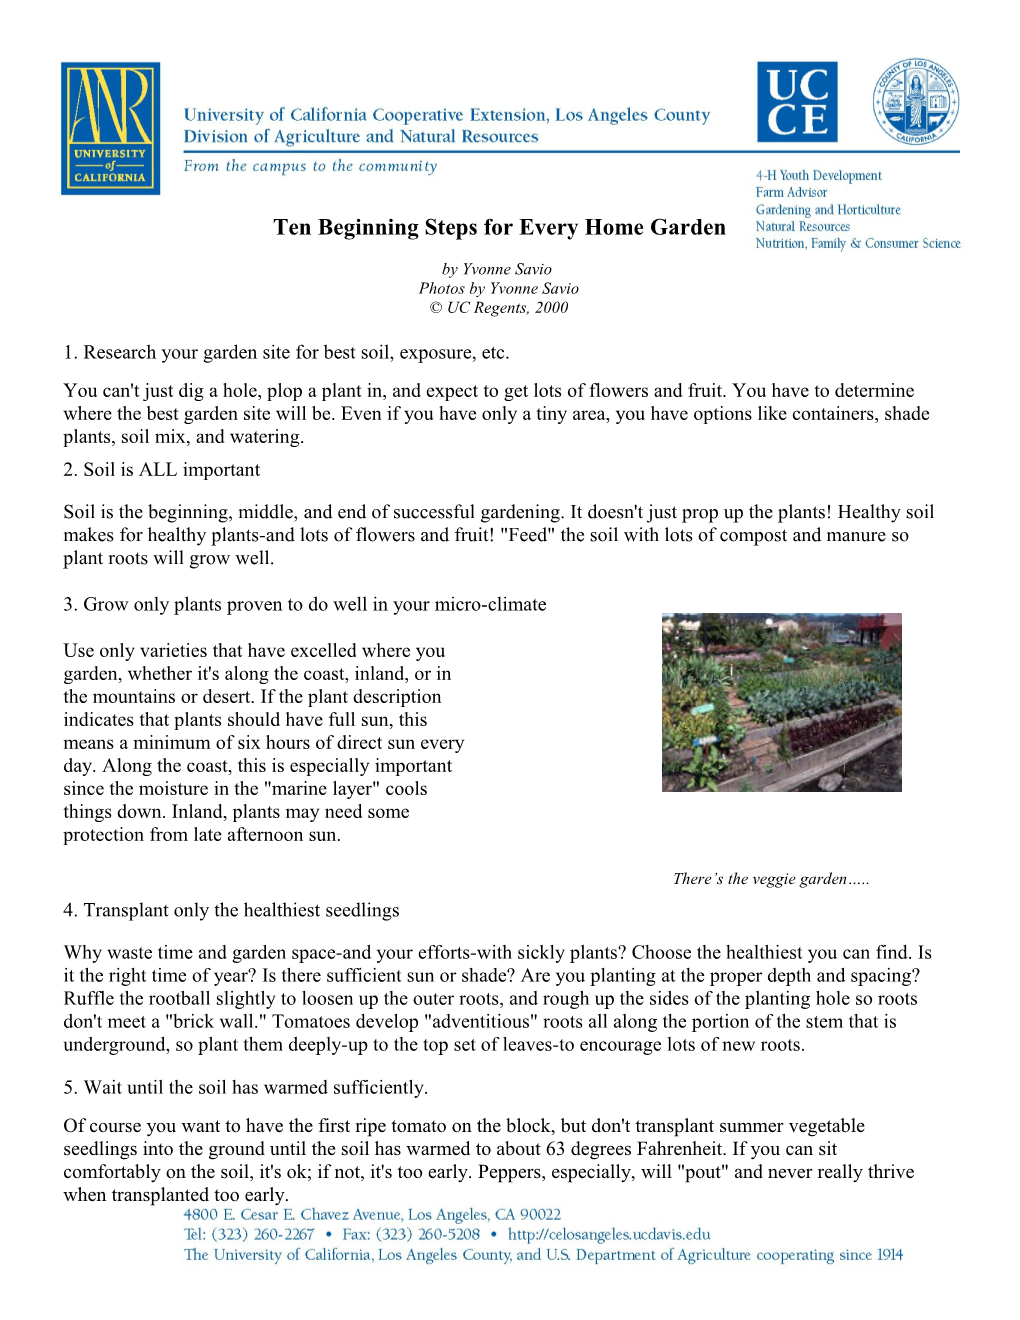 Ten Beginning Steps for Every Home Garden